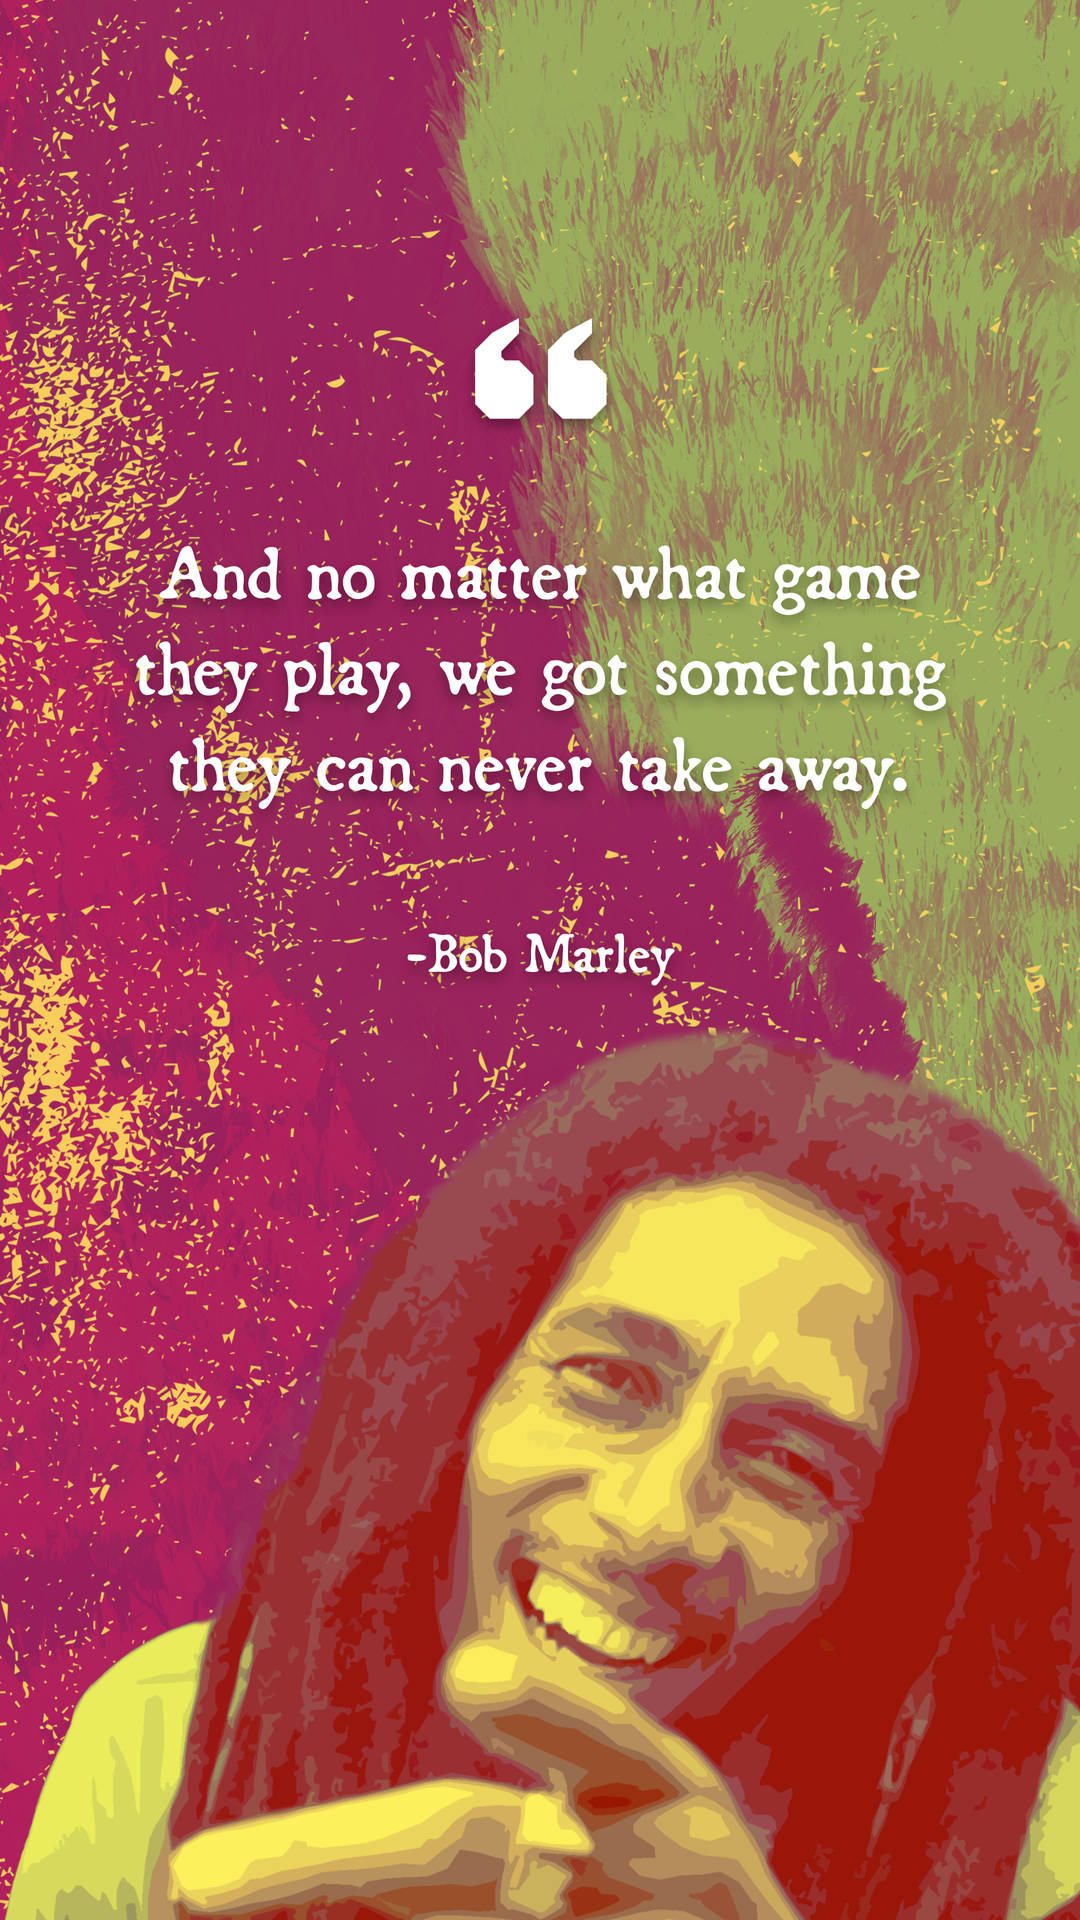 Bob Marley iPod  iPhone BG by Photshopmaniac on DeviantArt